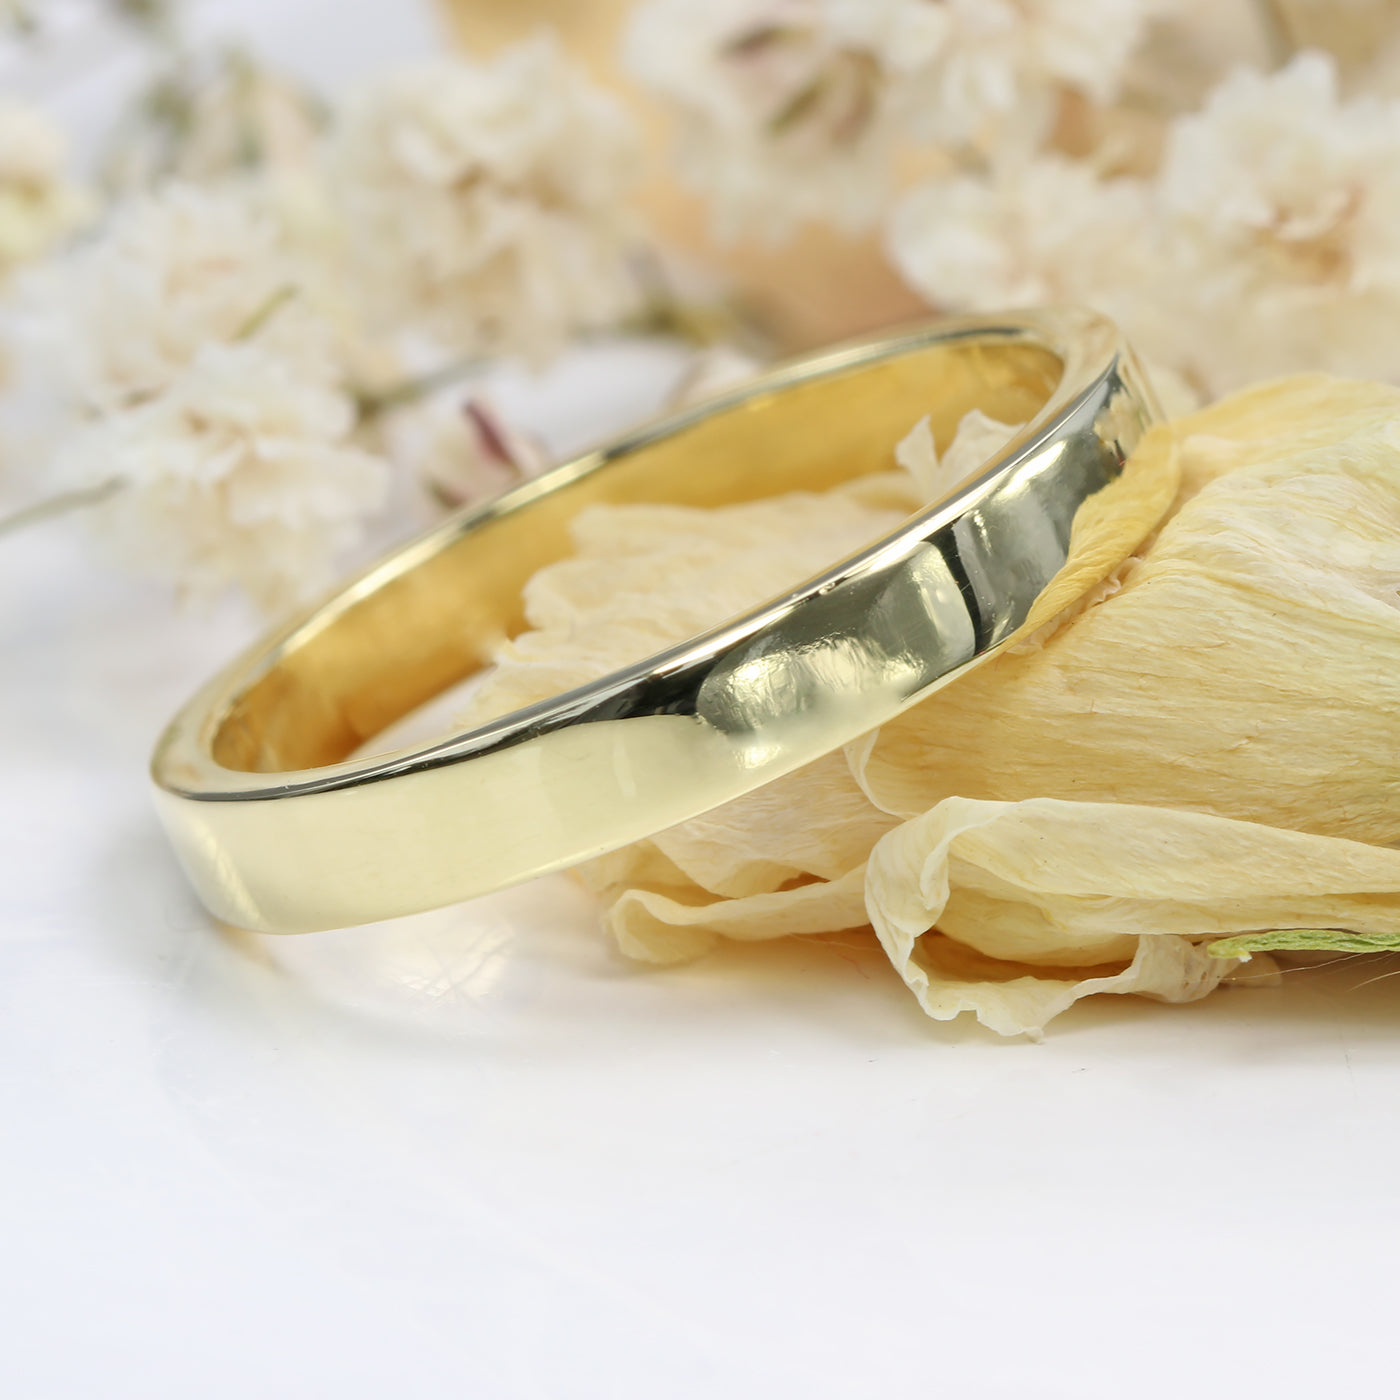 3mm 18ct Gold Flat Wedding Ring